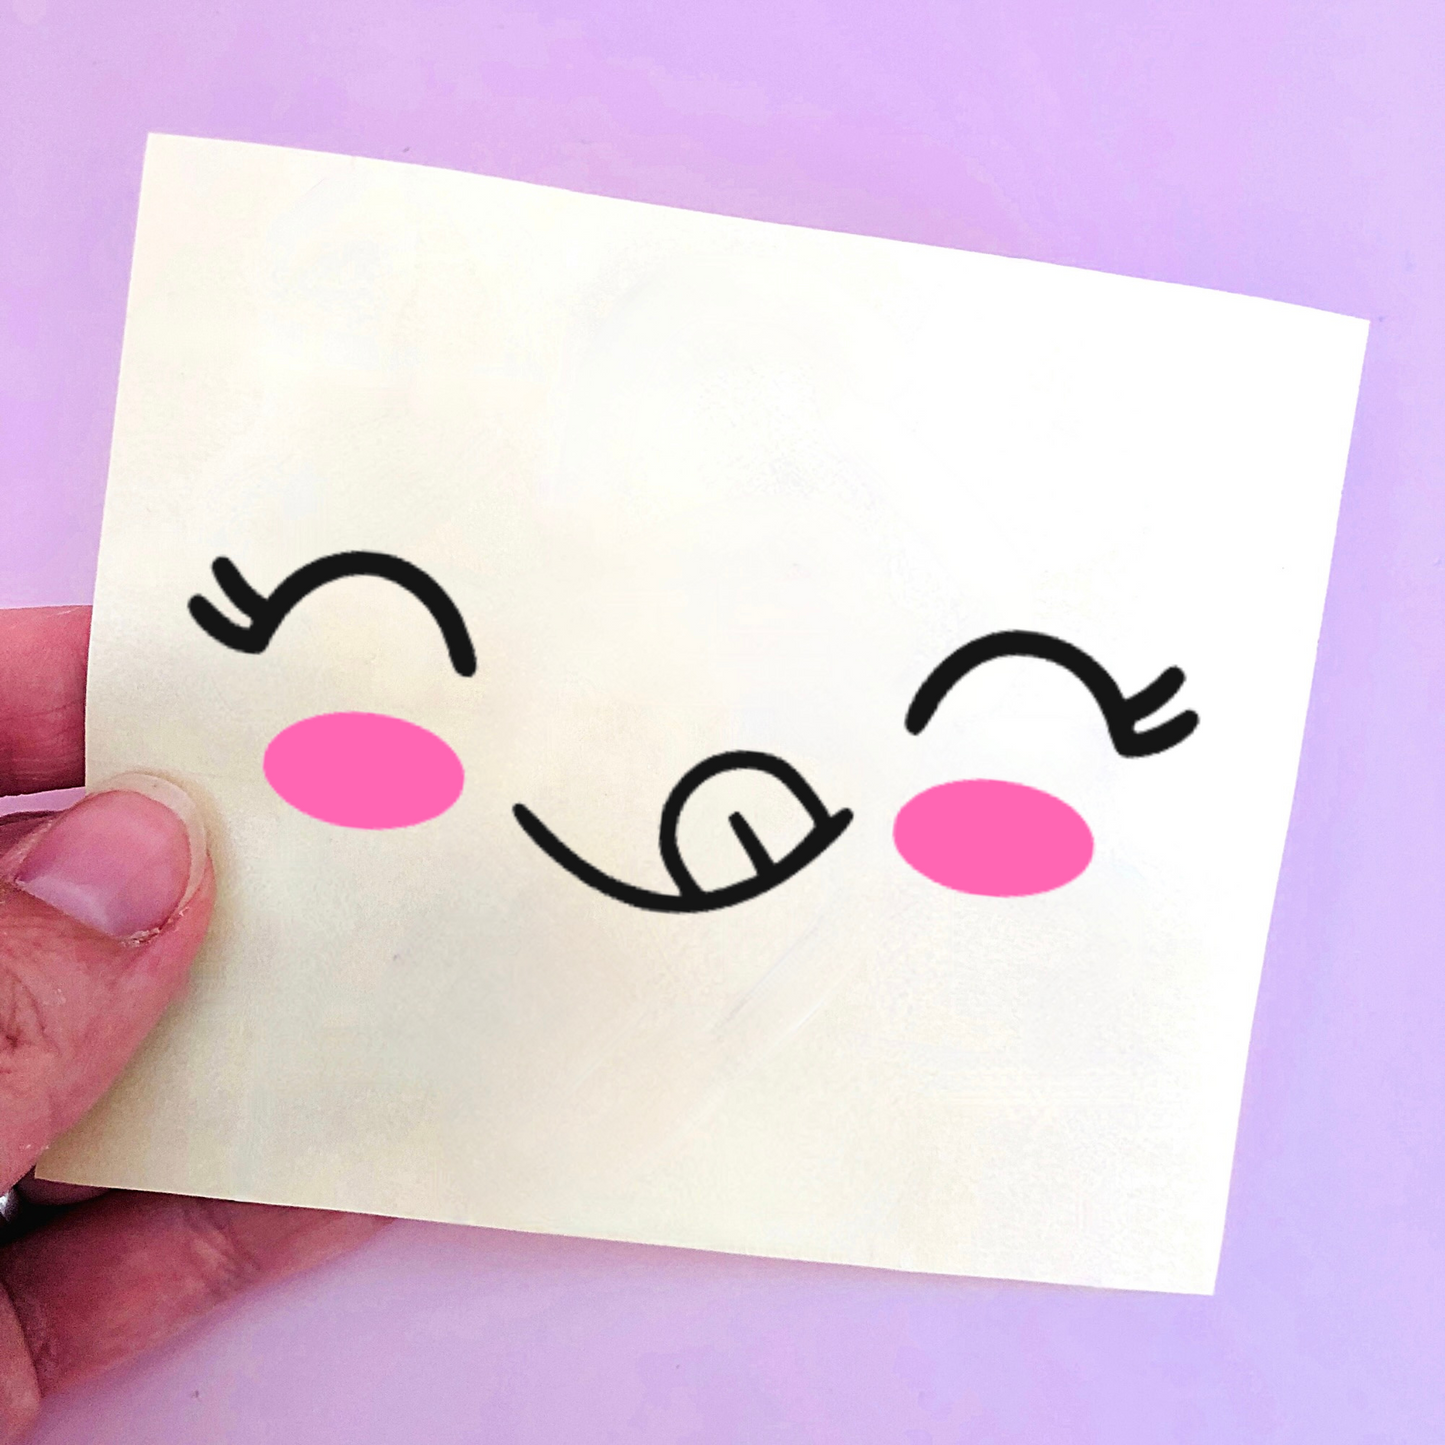 Sticker face - happy sticker for flower pot - cute face - face pot - gift mom girlfriend child - DIY sticker personalized